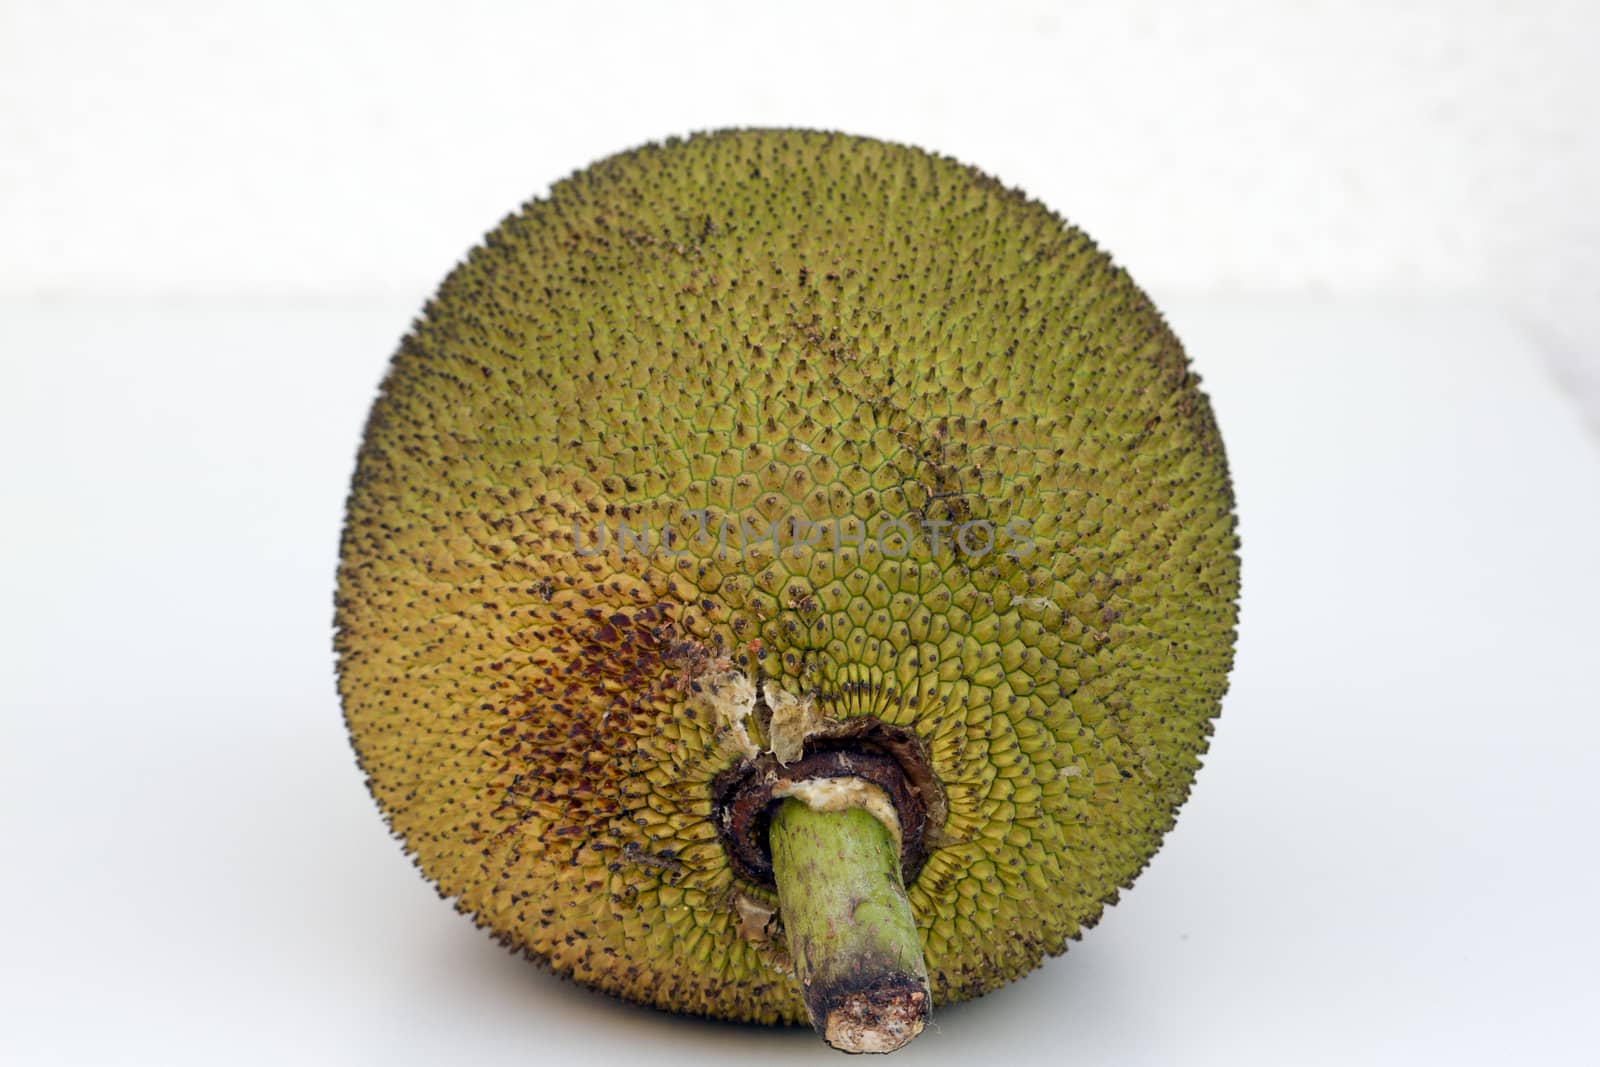 Large ripe jackfruit. India Goa. by mcherevan